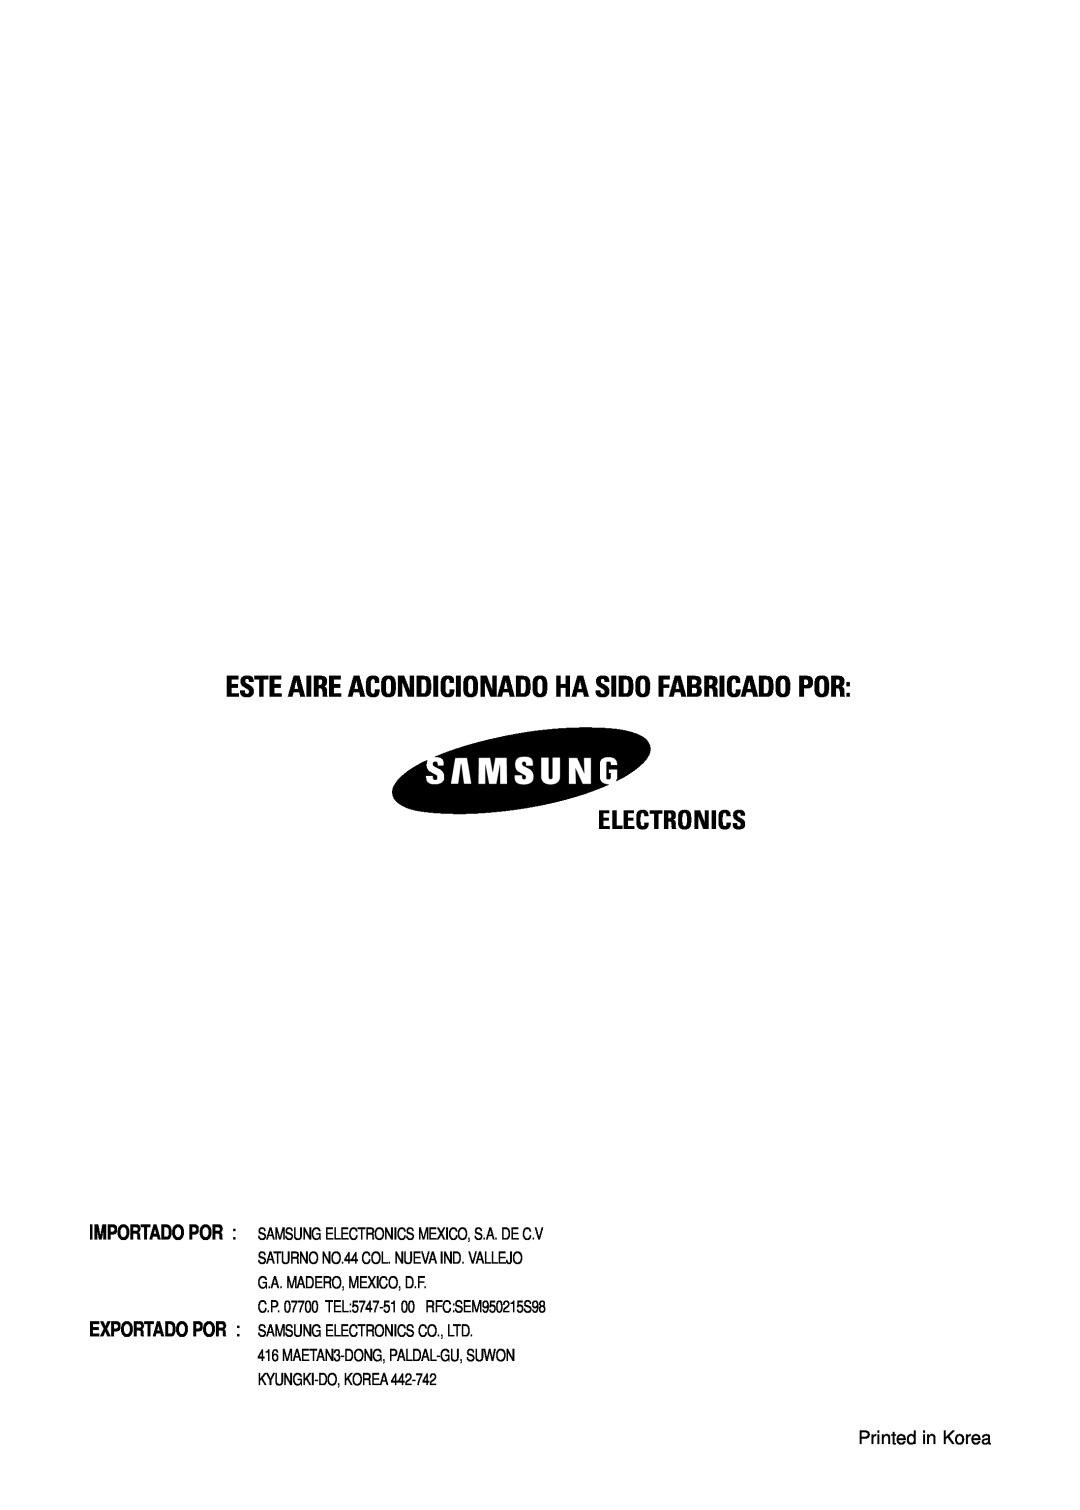 Samsung AS18S0GB, AS12SGGB manual Este Aire Acondicionado Ha Sido Fabricado Por, Electronics 